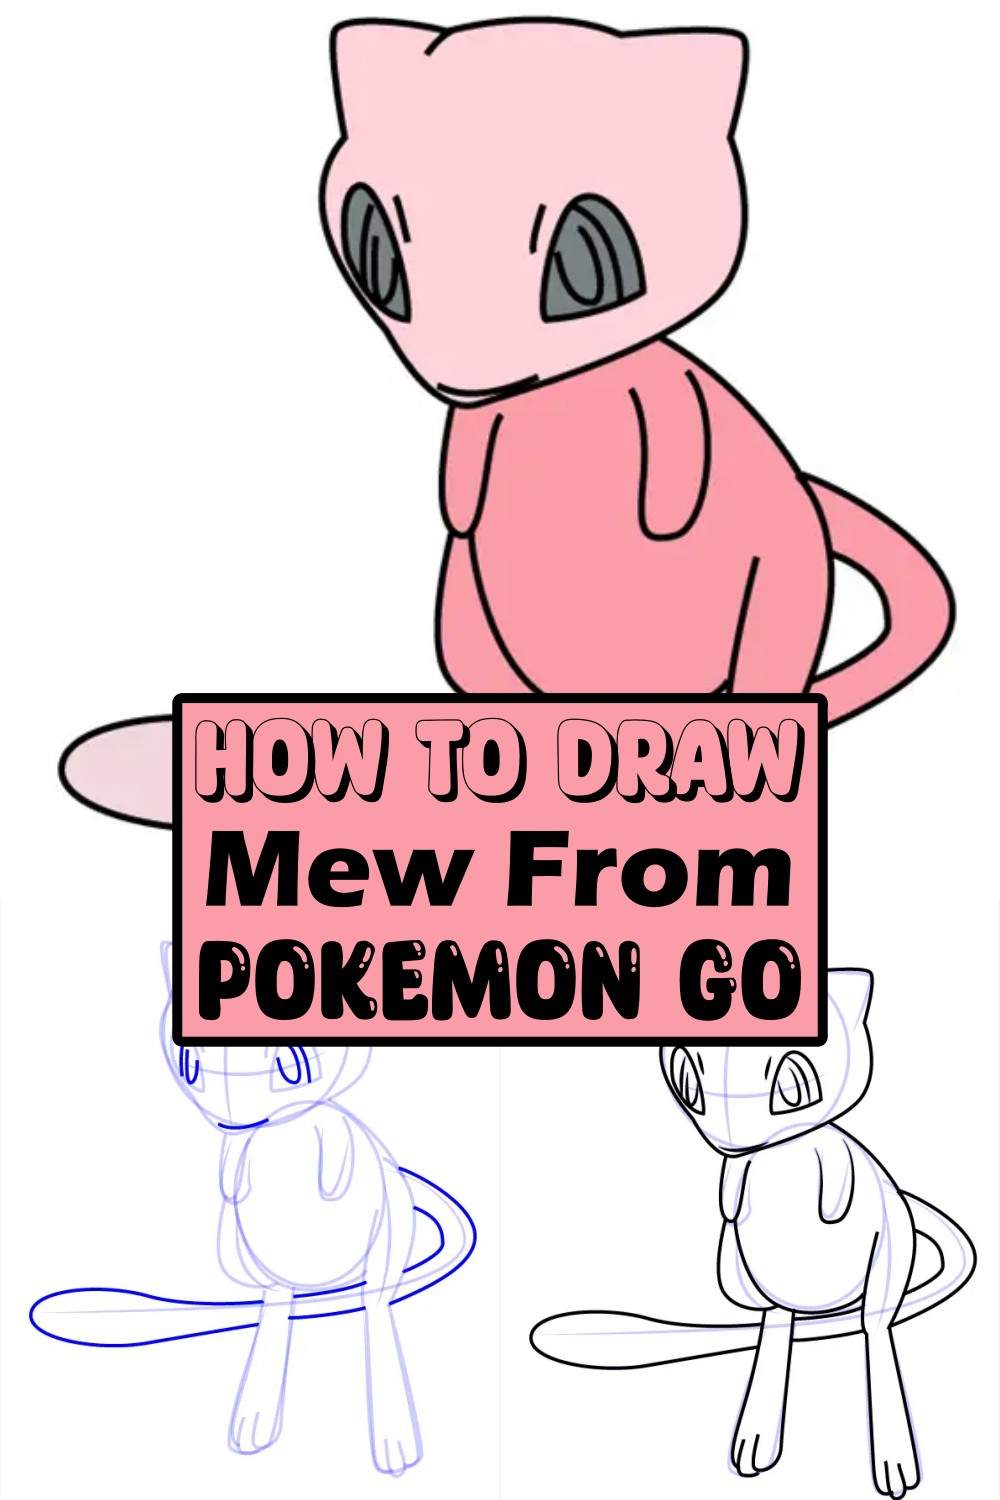 How To Draw Mew From Pokemon Go